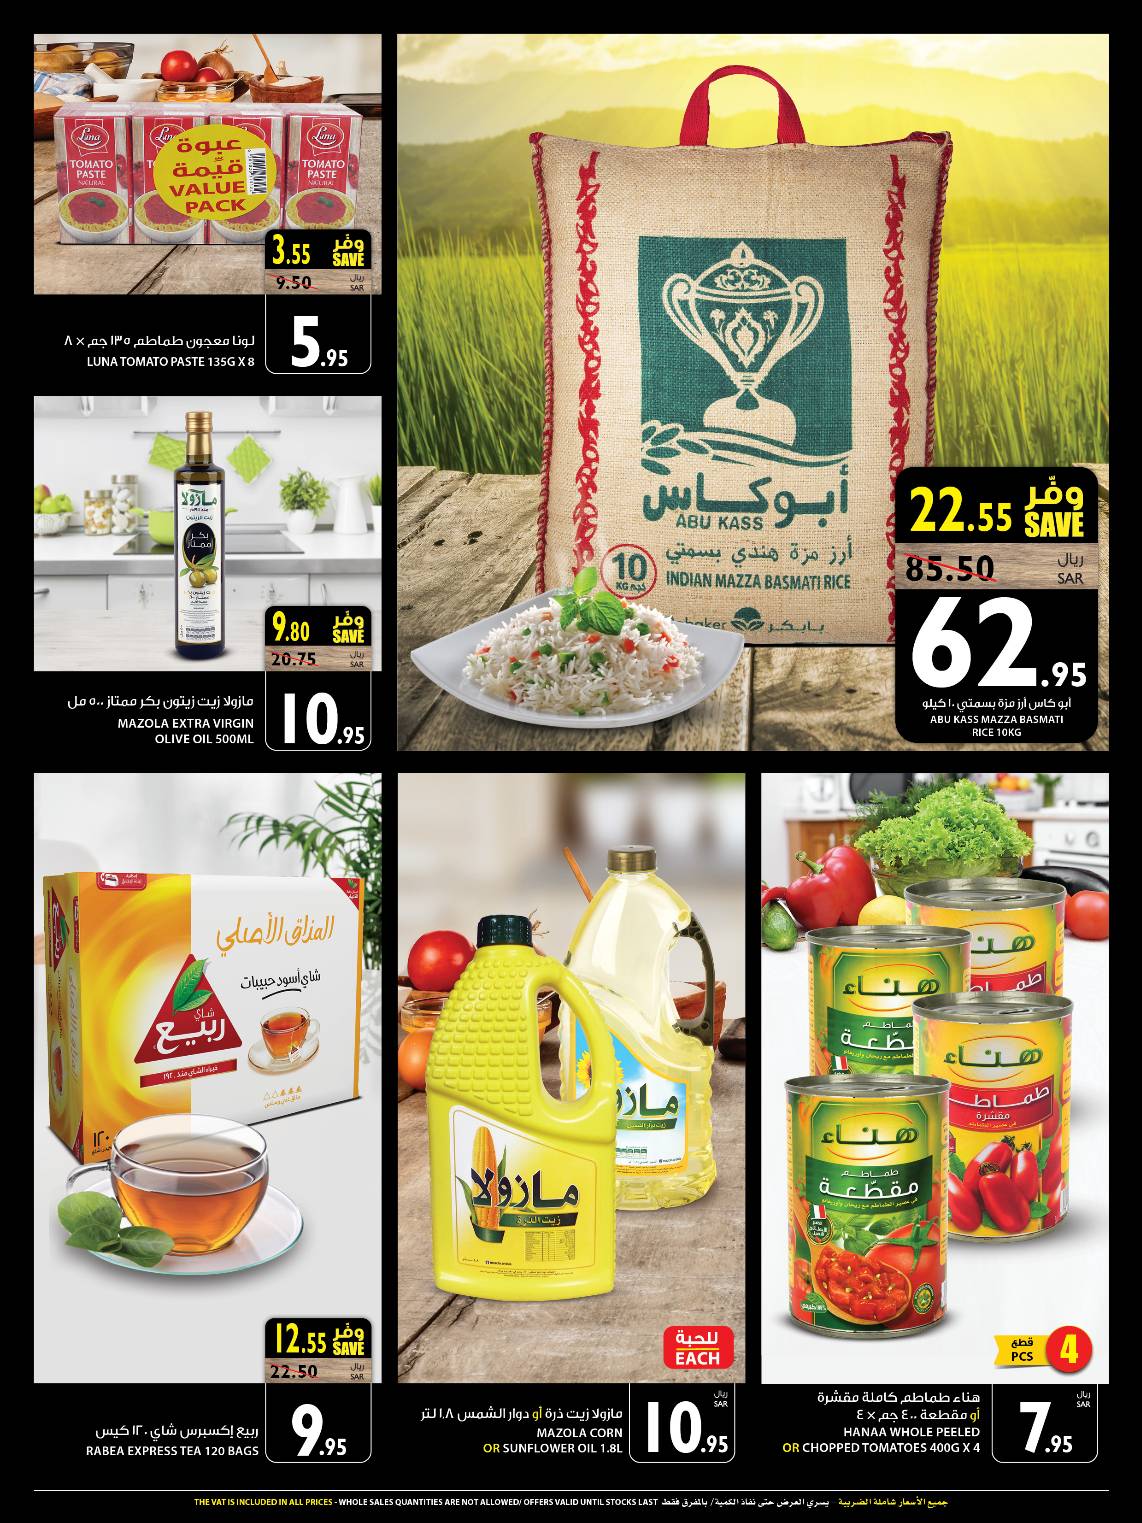 C4 3009 FOOD FESTIVAL whatsapp Central region.pdf 2 - عروض كارفور الرياض اليوم الاربعاء 30/9/2020 لمدة 4 ايام - مهرجان الاطعمة